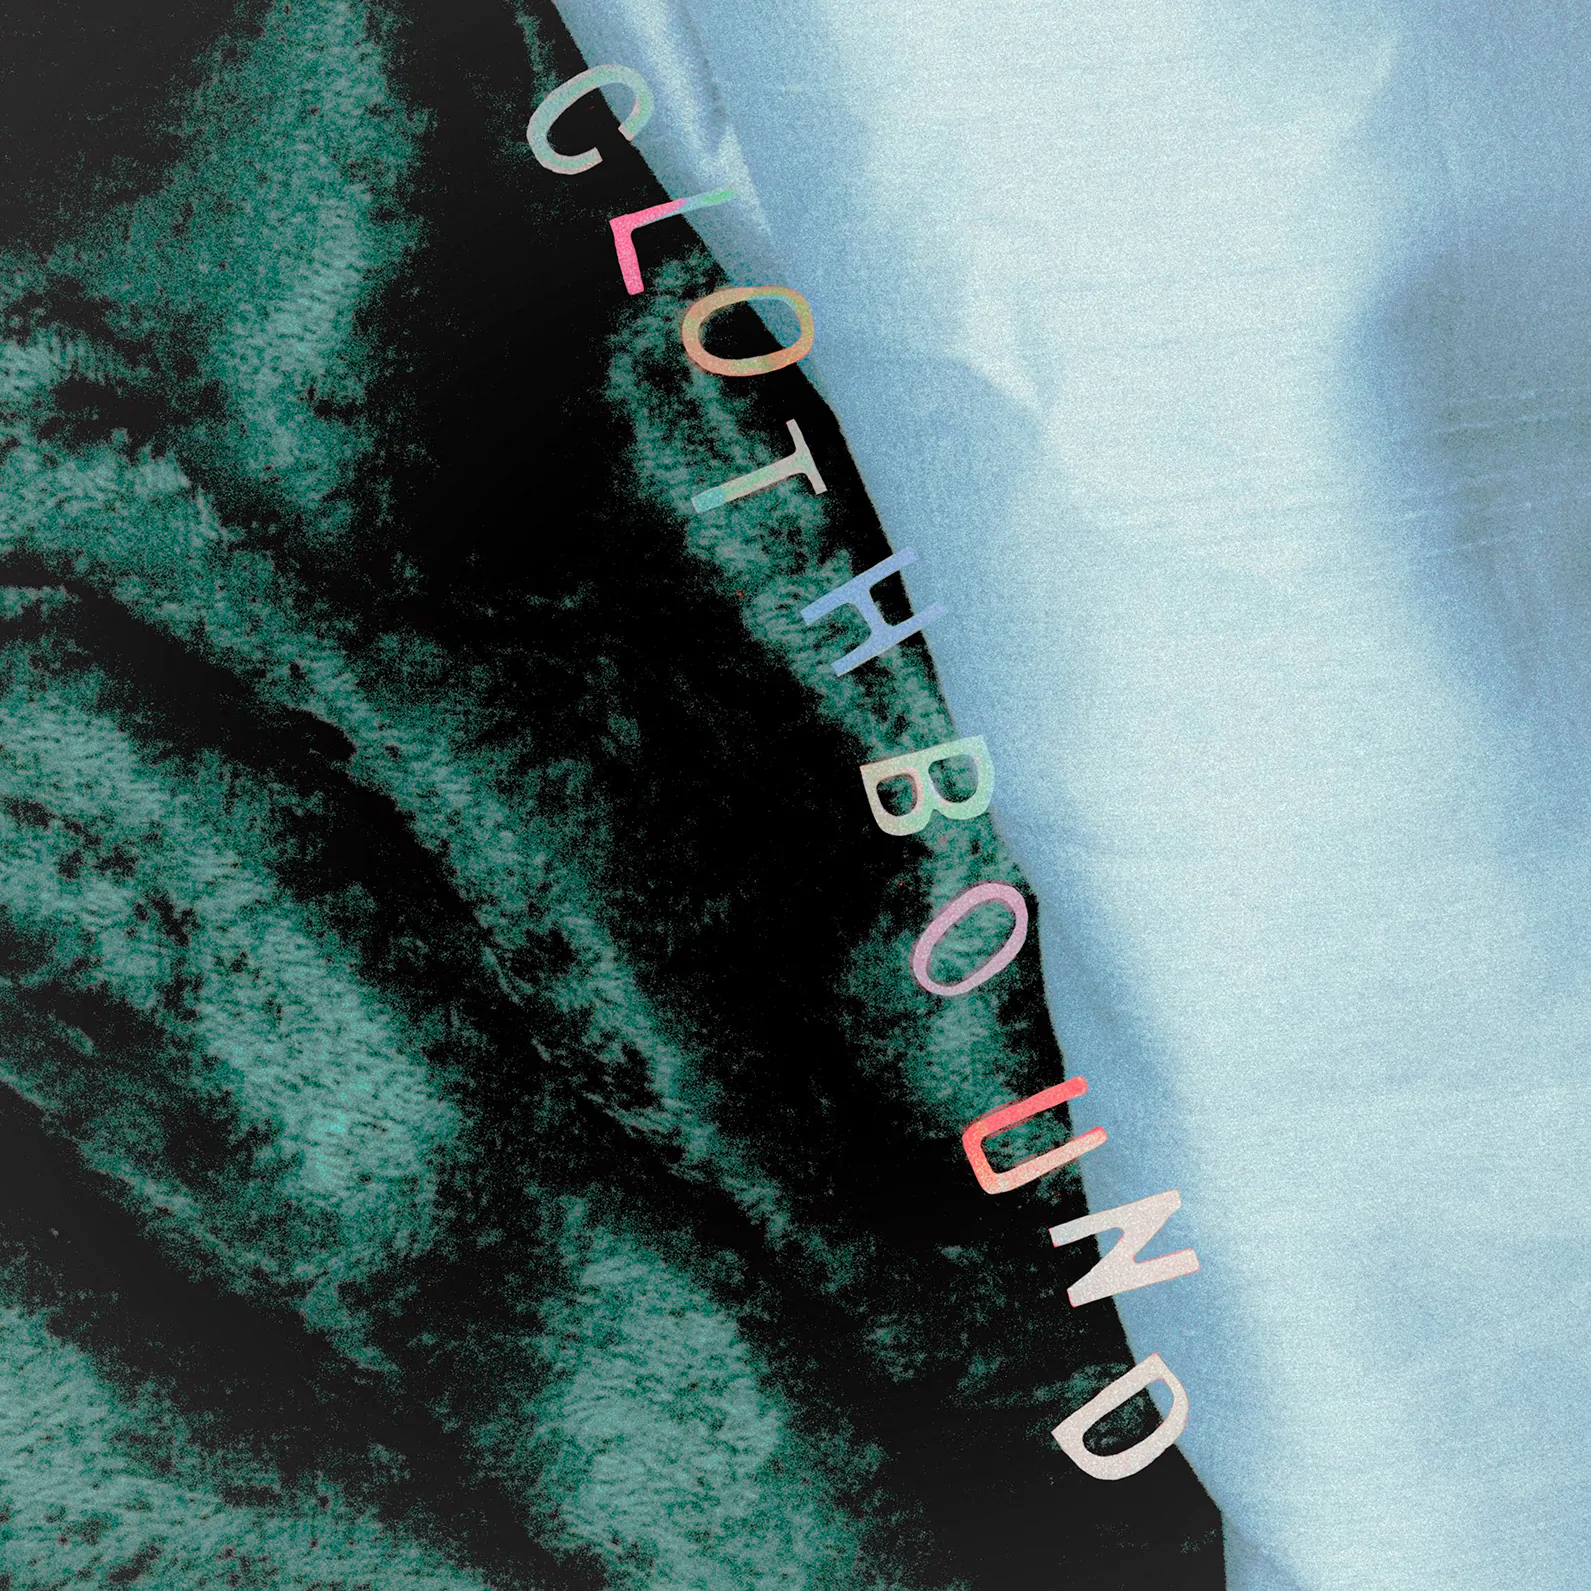 ALBUM REVIEW: The Sonder Bombs – Clothbound